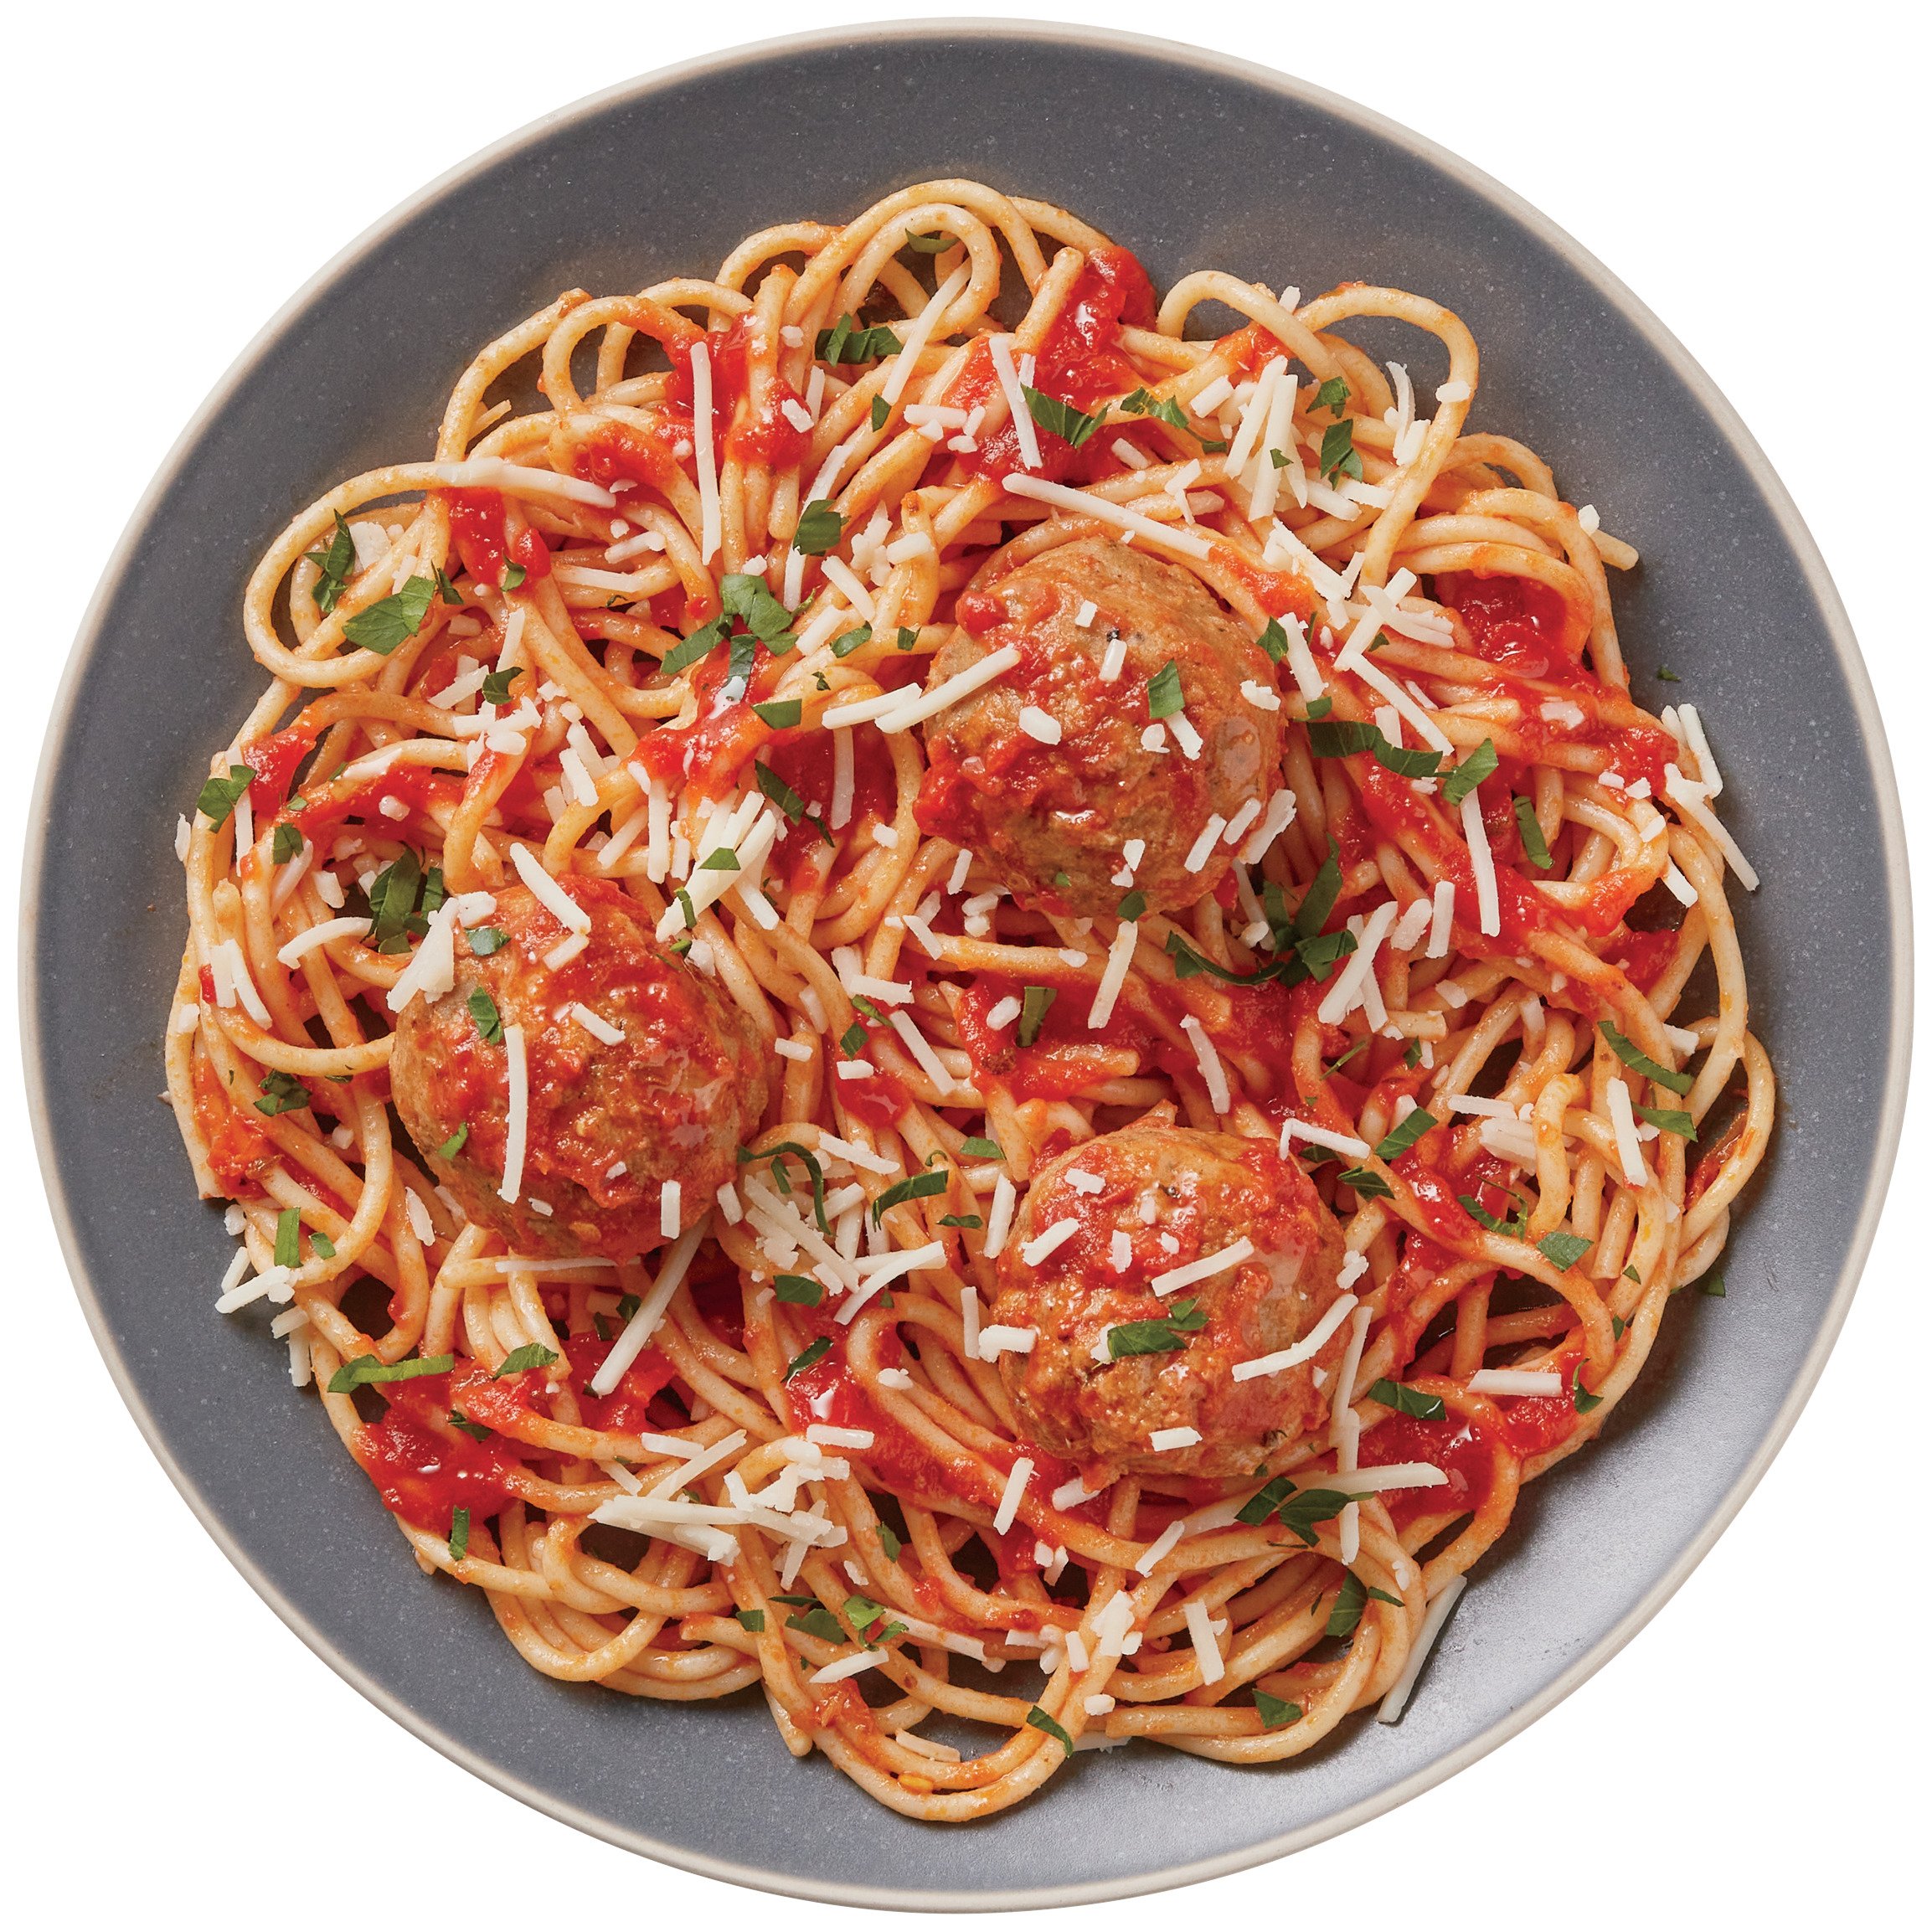 Campbell's SpaghettiOs Original - Shop Pantry Meals at H-E-B